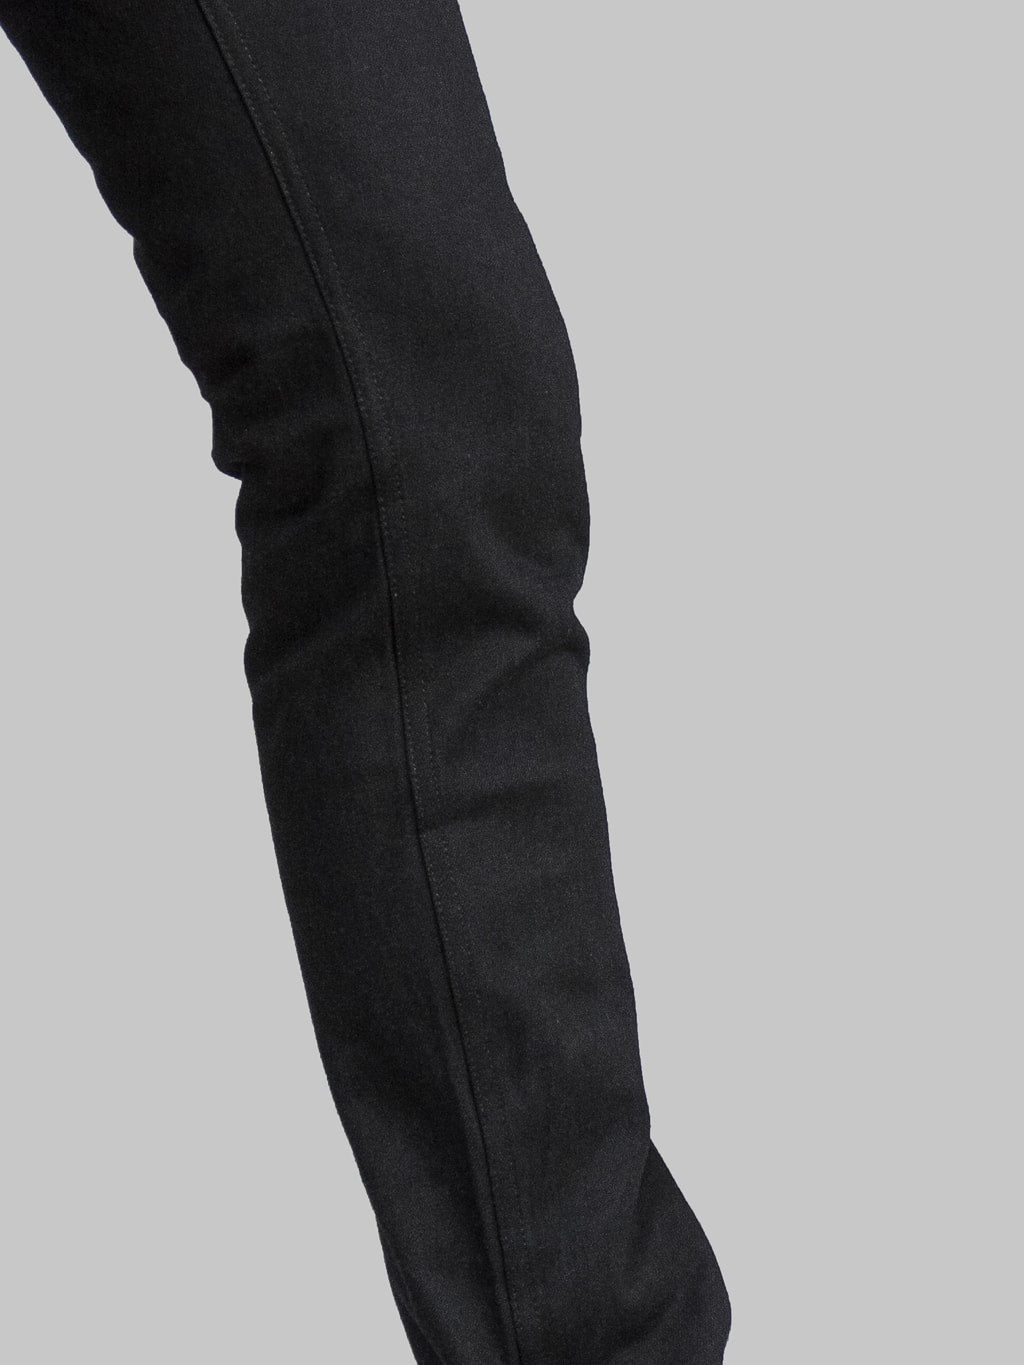 Freenote Cloth Rios Black Grey Japanese Denim Slim Straight Jeans inseam